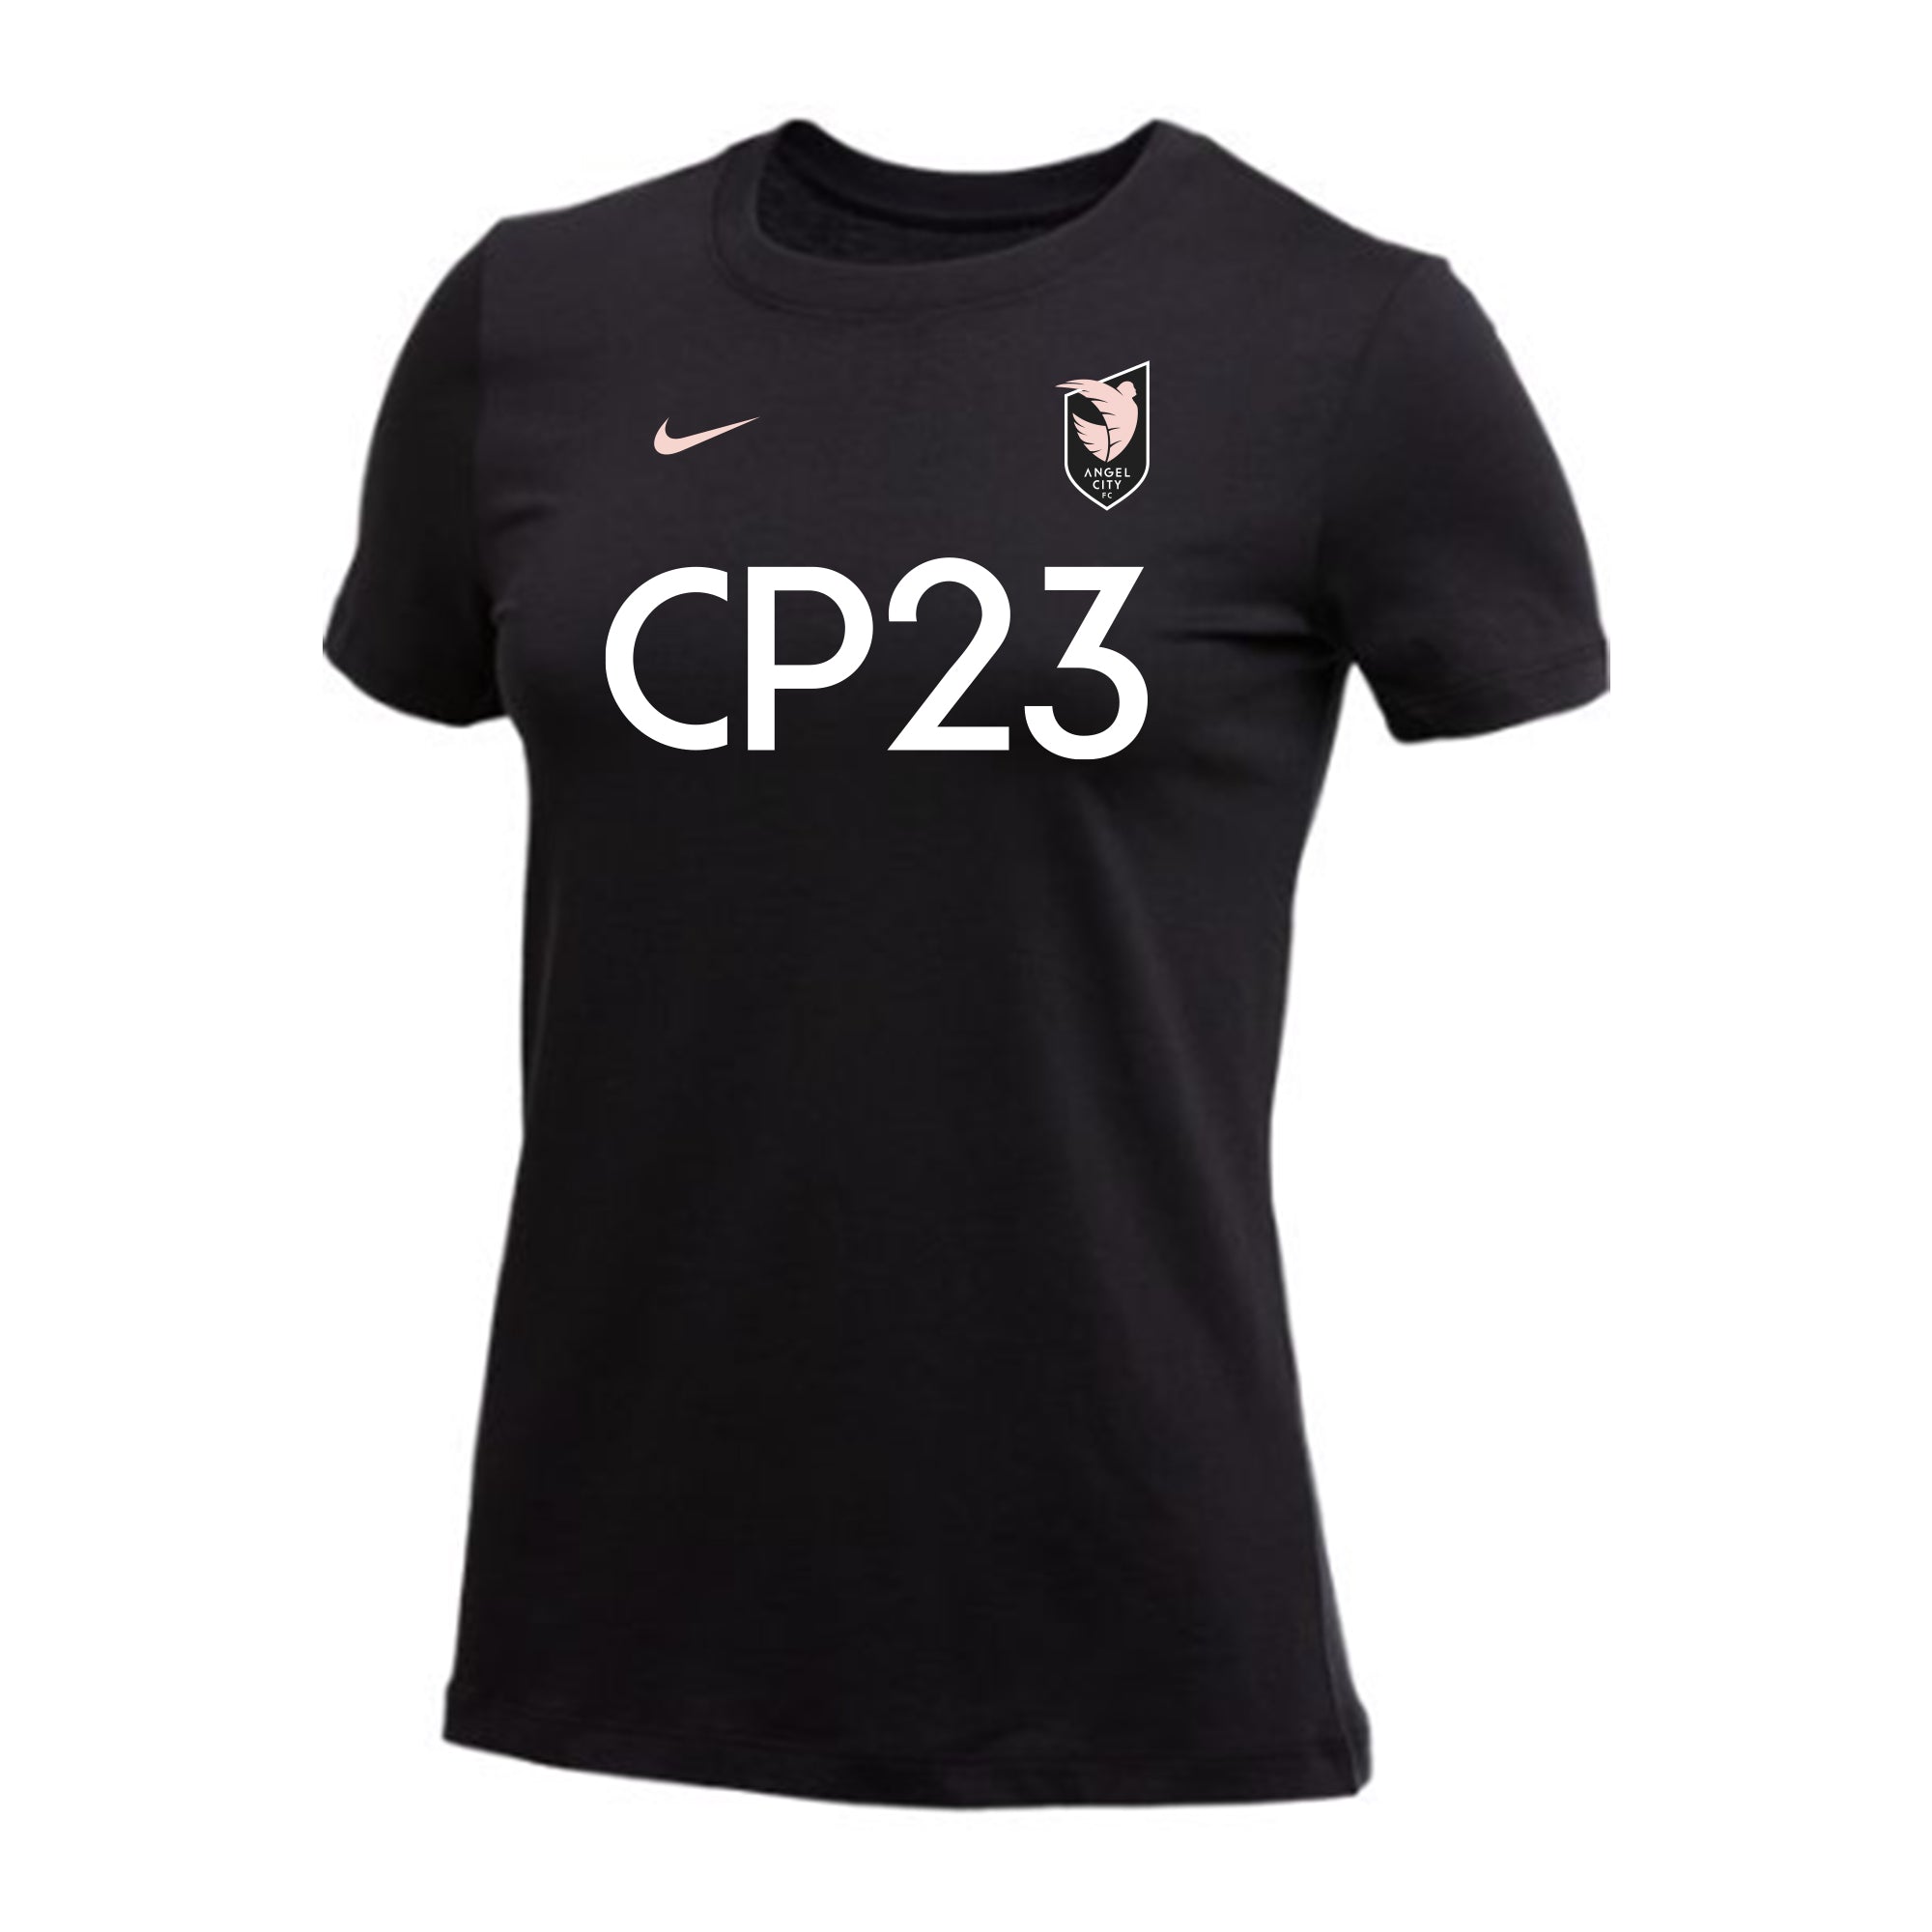 Angel City FC Nike - Camiseta de manga corta para mujer, color negro, CP23